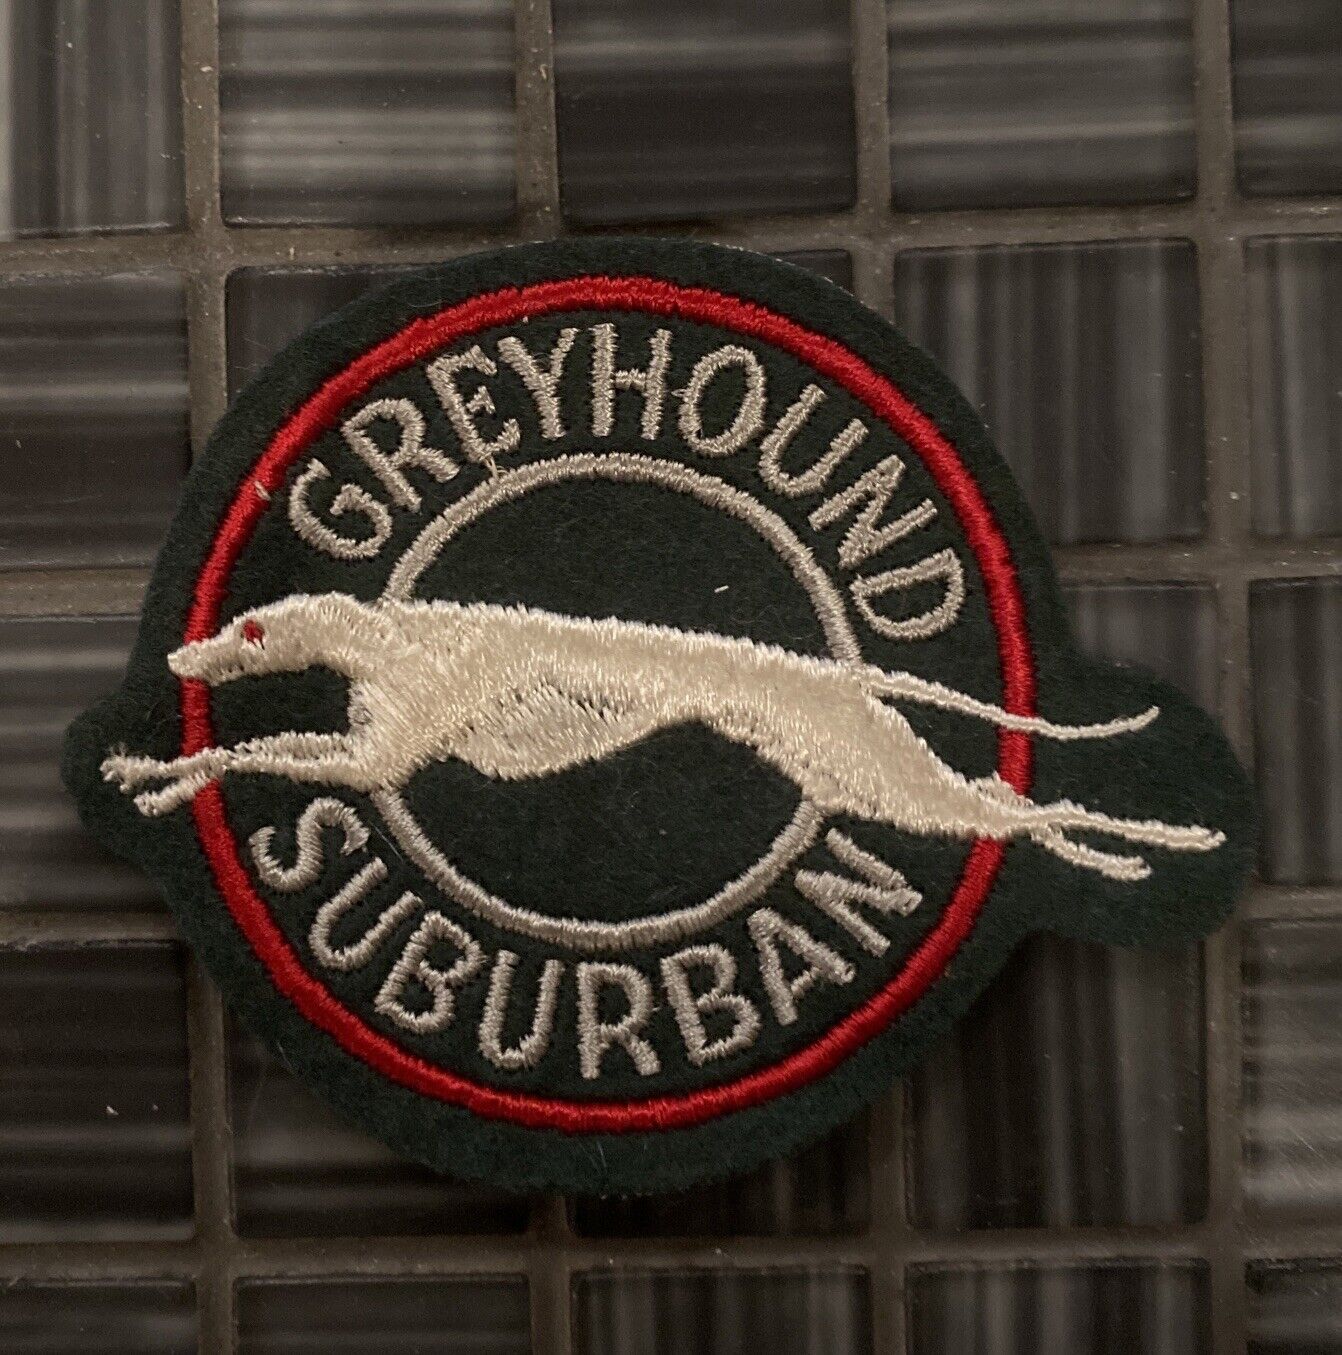 Vintage Greyhound Suburban Bus Patch 1940s?